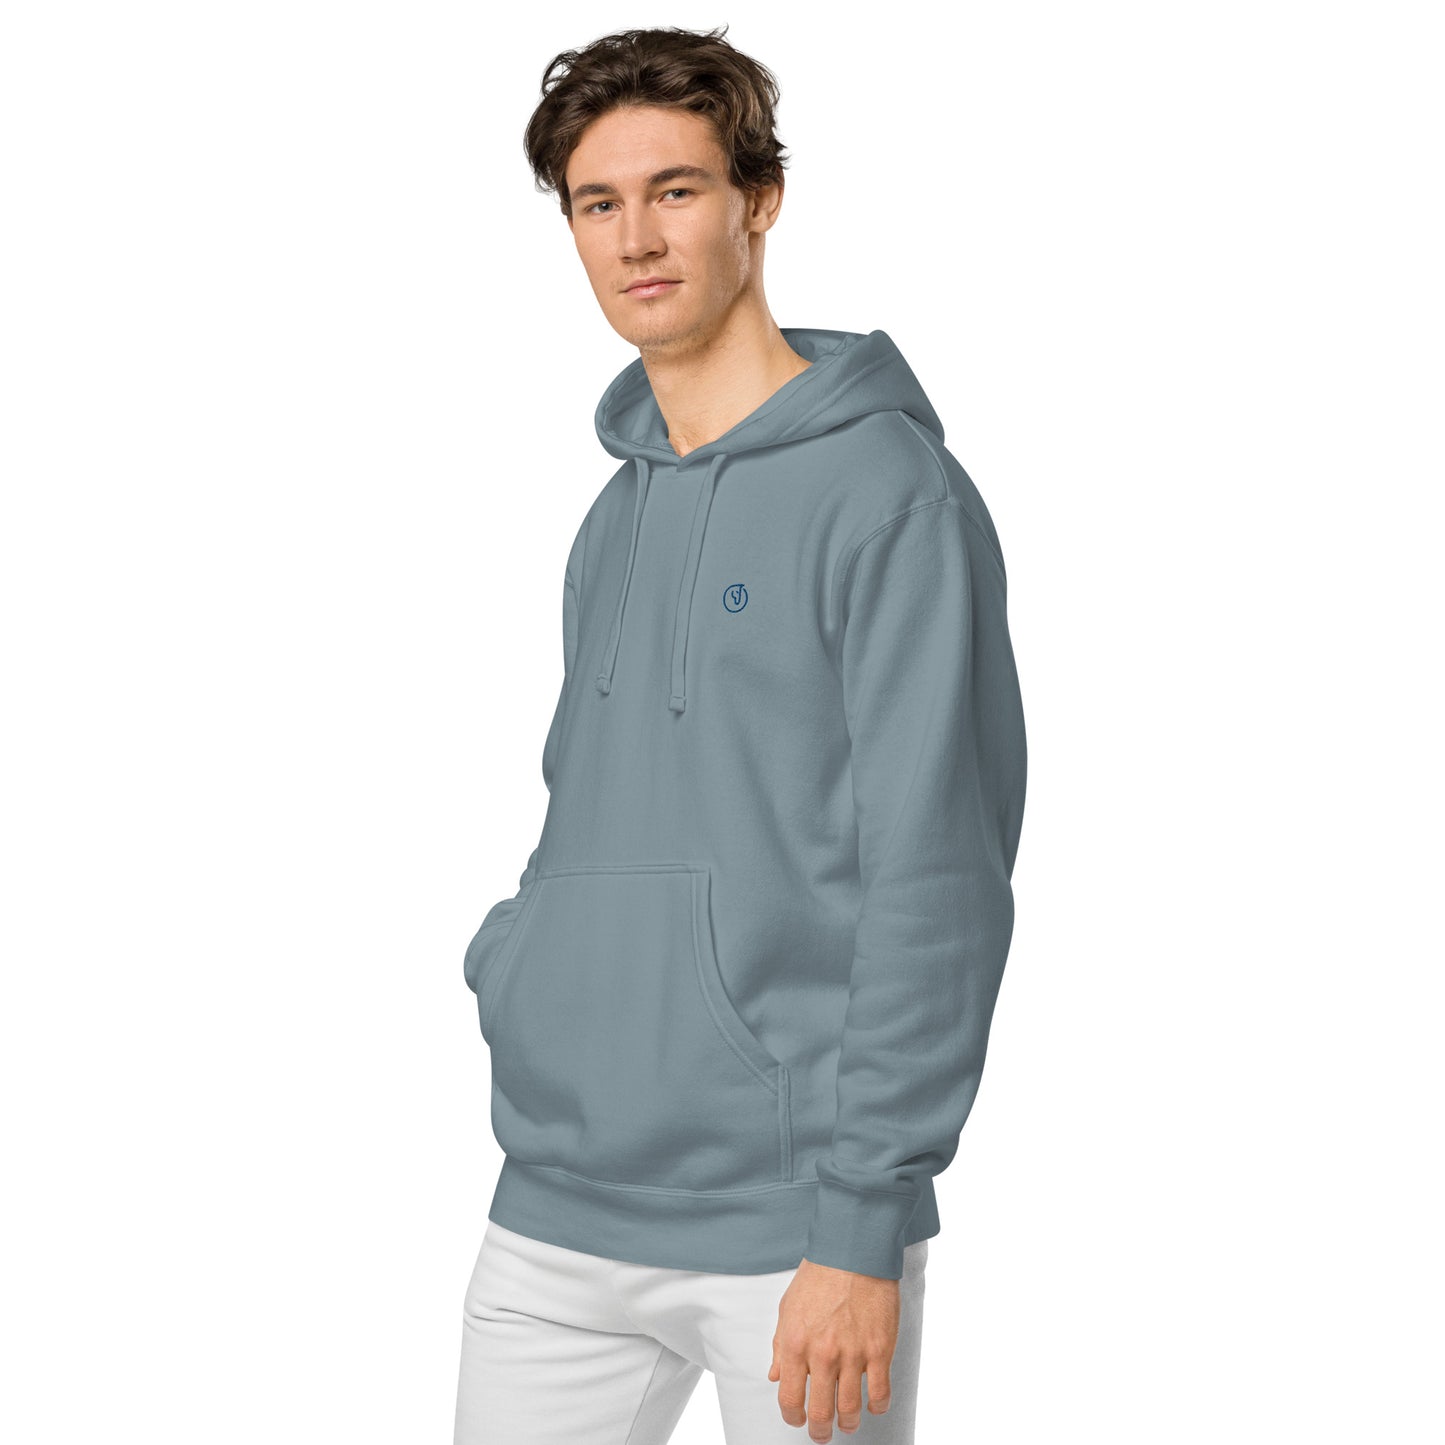 Humble sportswear, men’s hoodies, matching hoodies, heavyweight hoodies for men